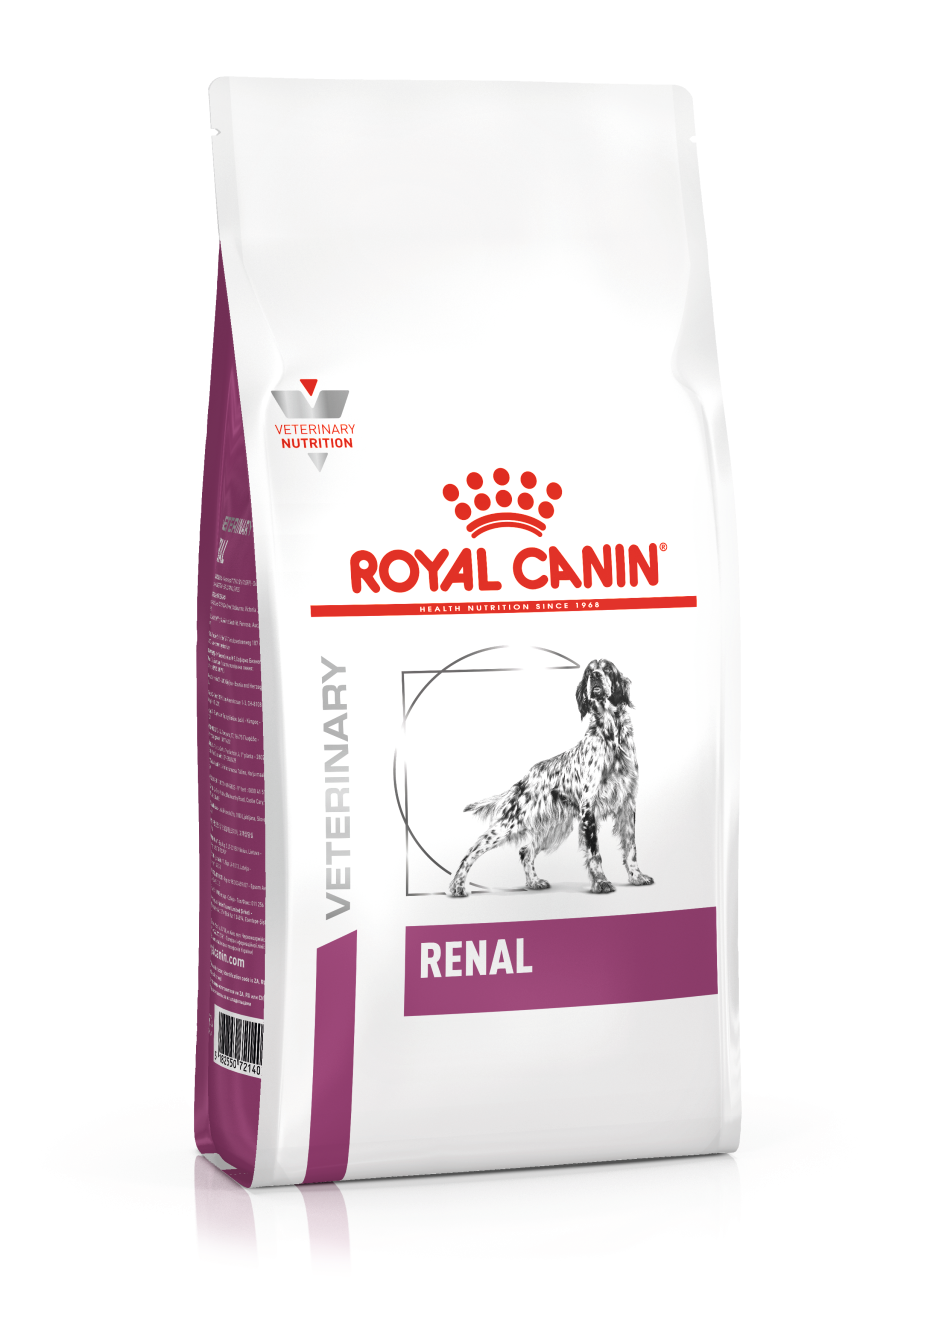 Royal Canin Renal hond<br> 1 x 2 kg